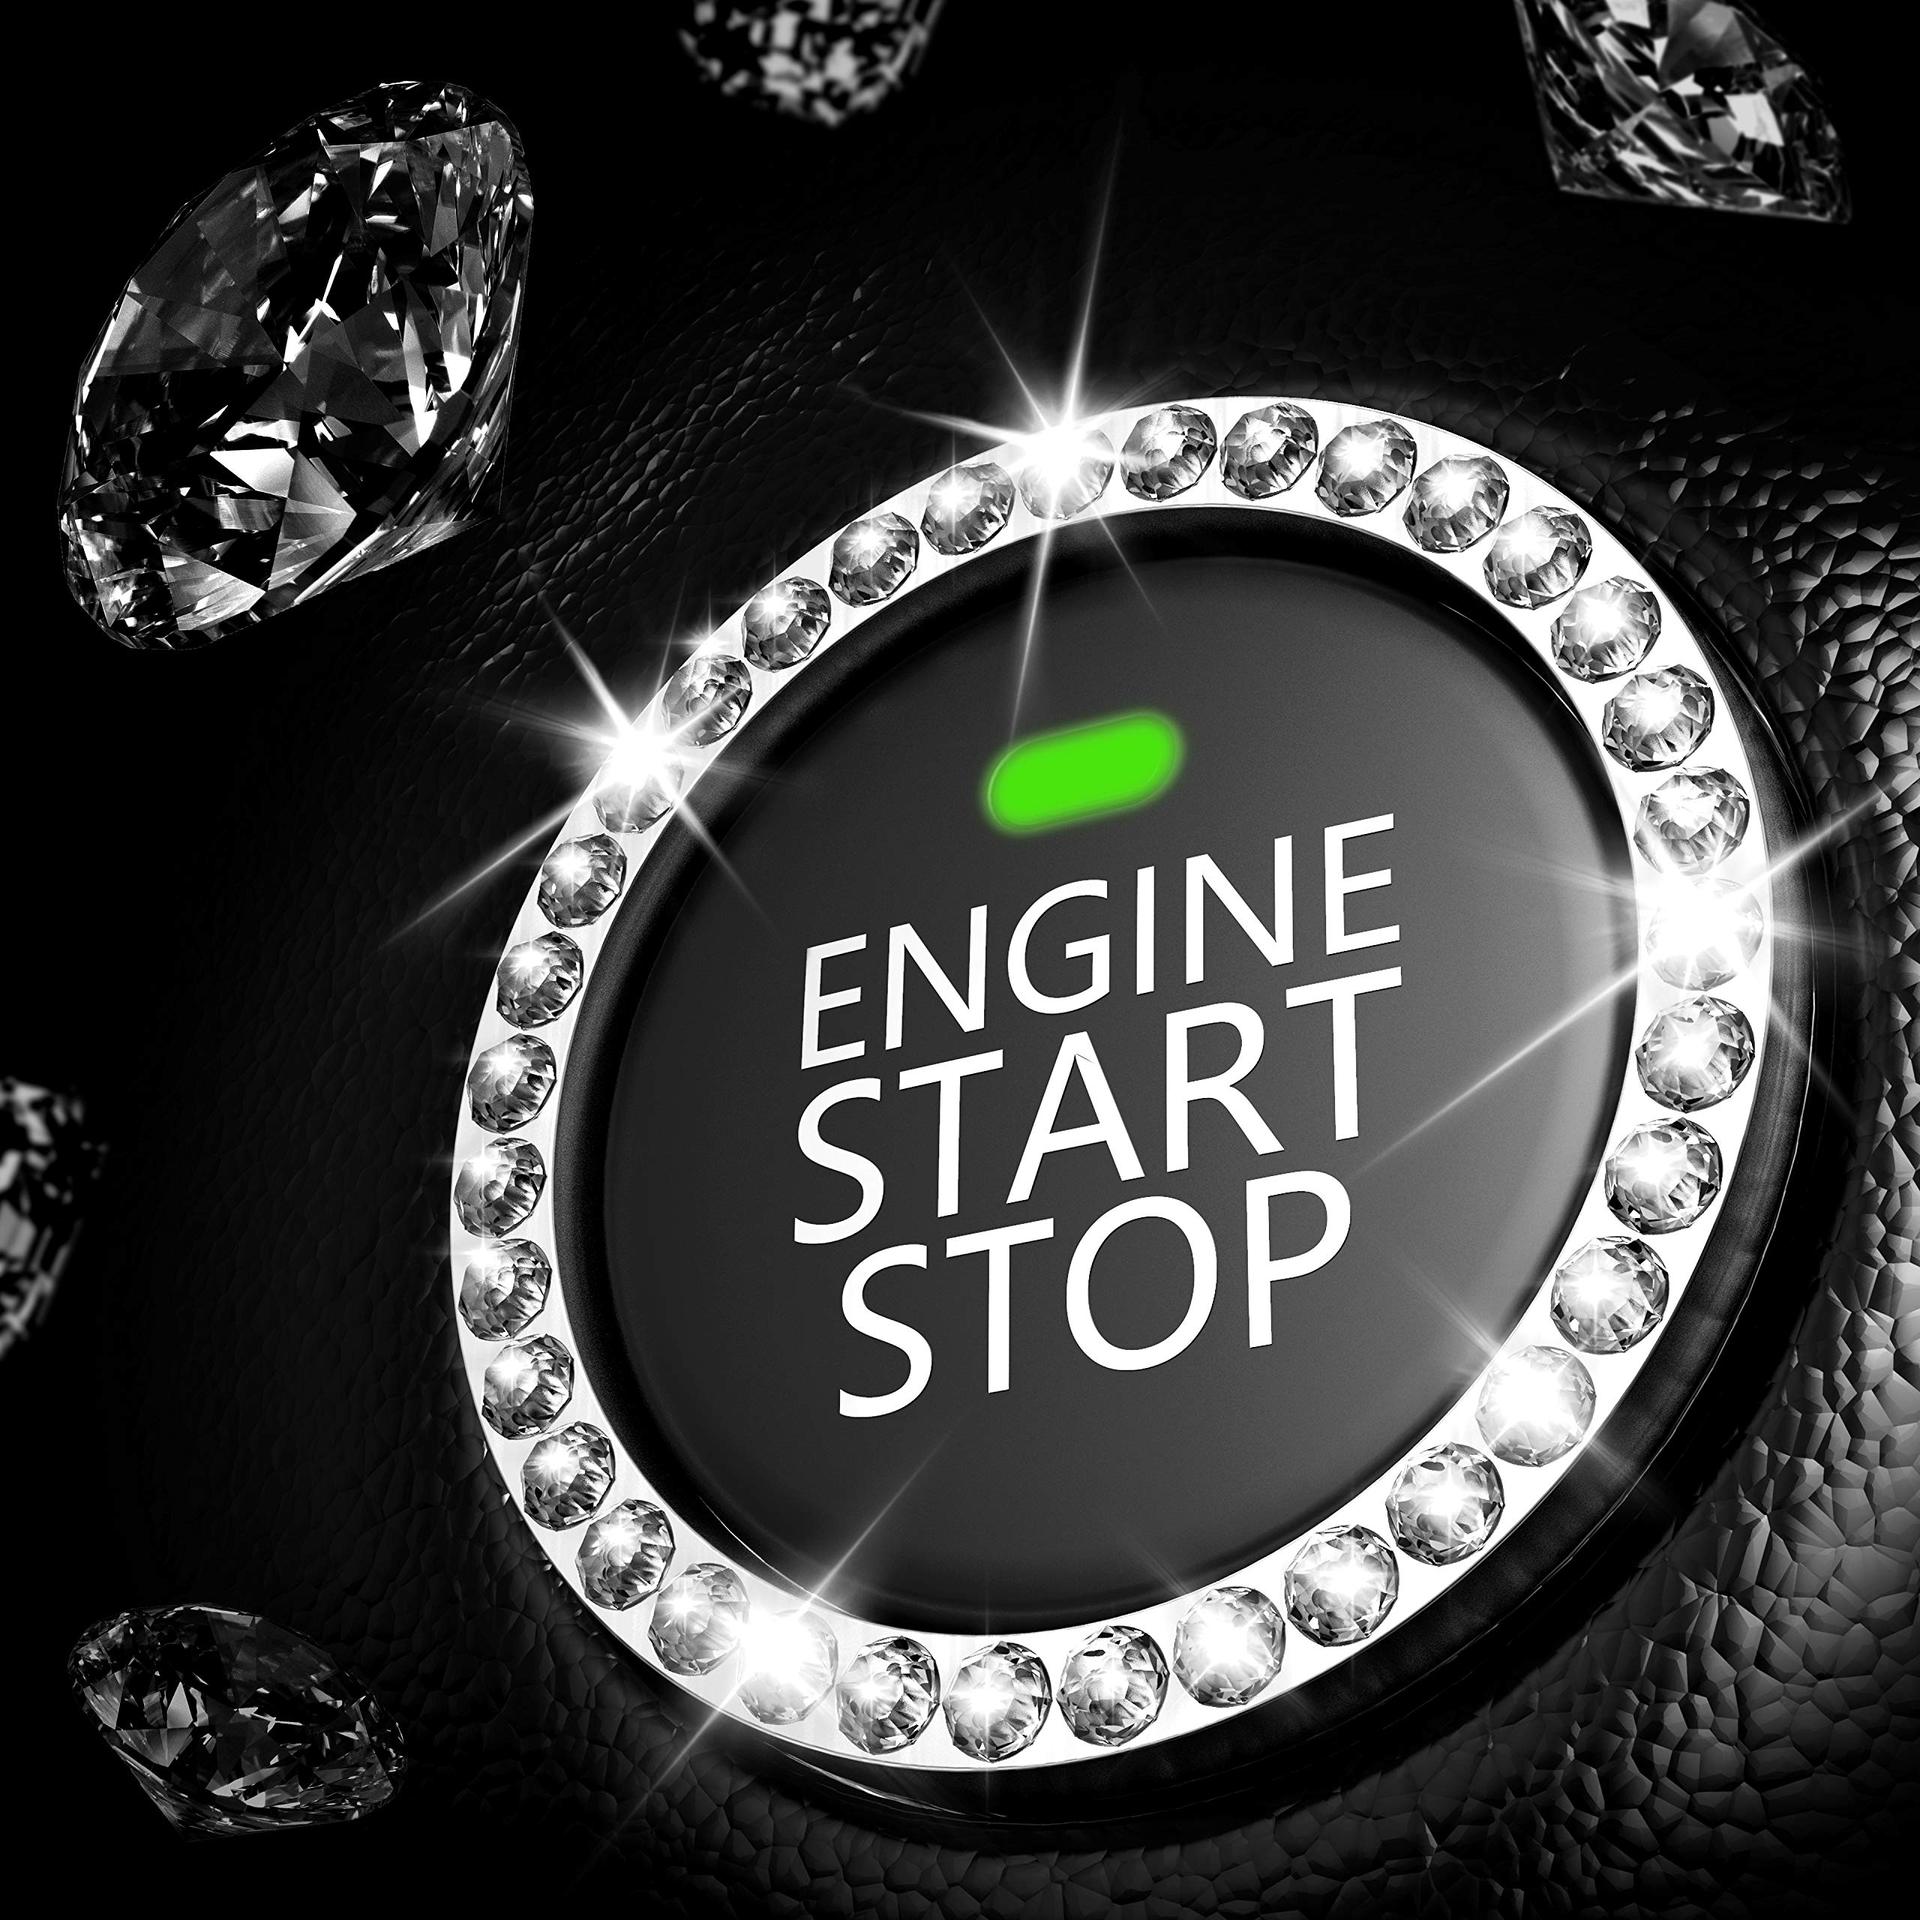 Crystal Diamond Car Stickers One-Click Ingation Engine Start Stop Ring –  Quickship